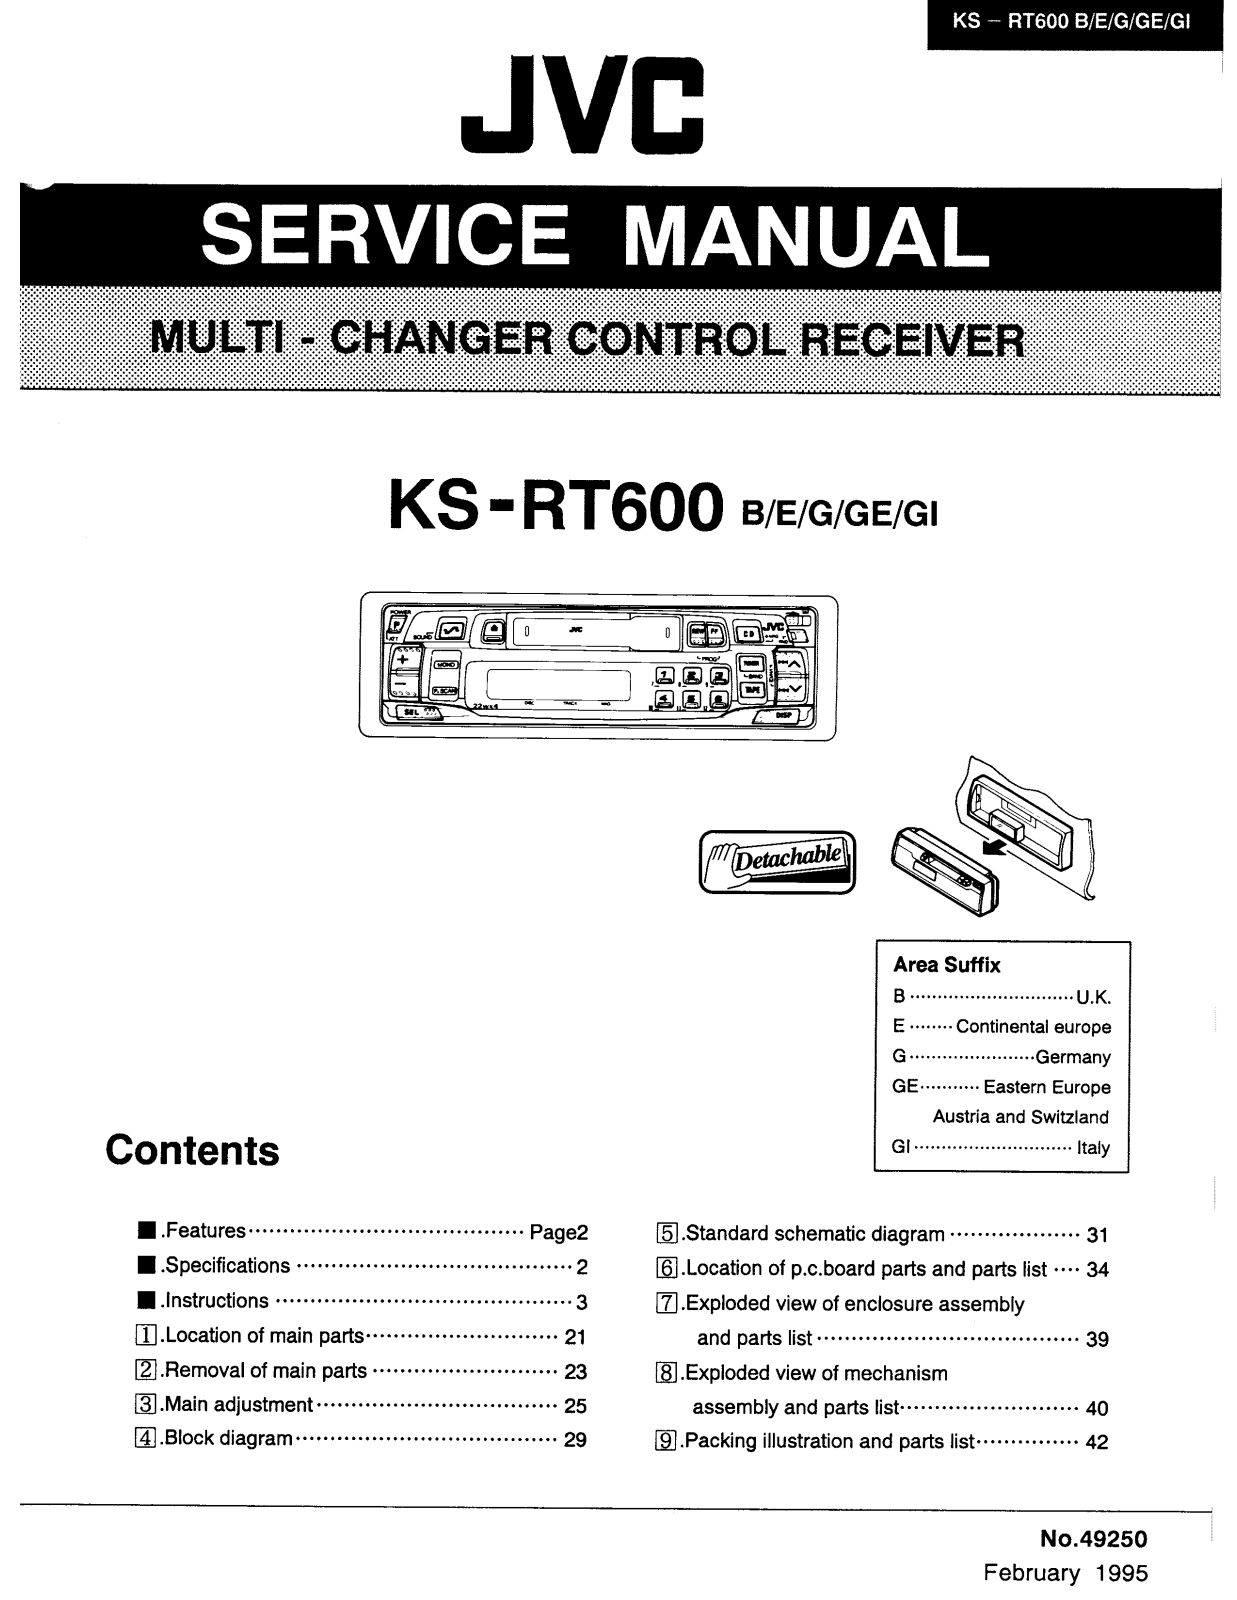 JVC KS-RT600B, KS-RT600E, KS-RT600G, KS-RT600GE, KS-RT600GI Service Manual